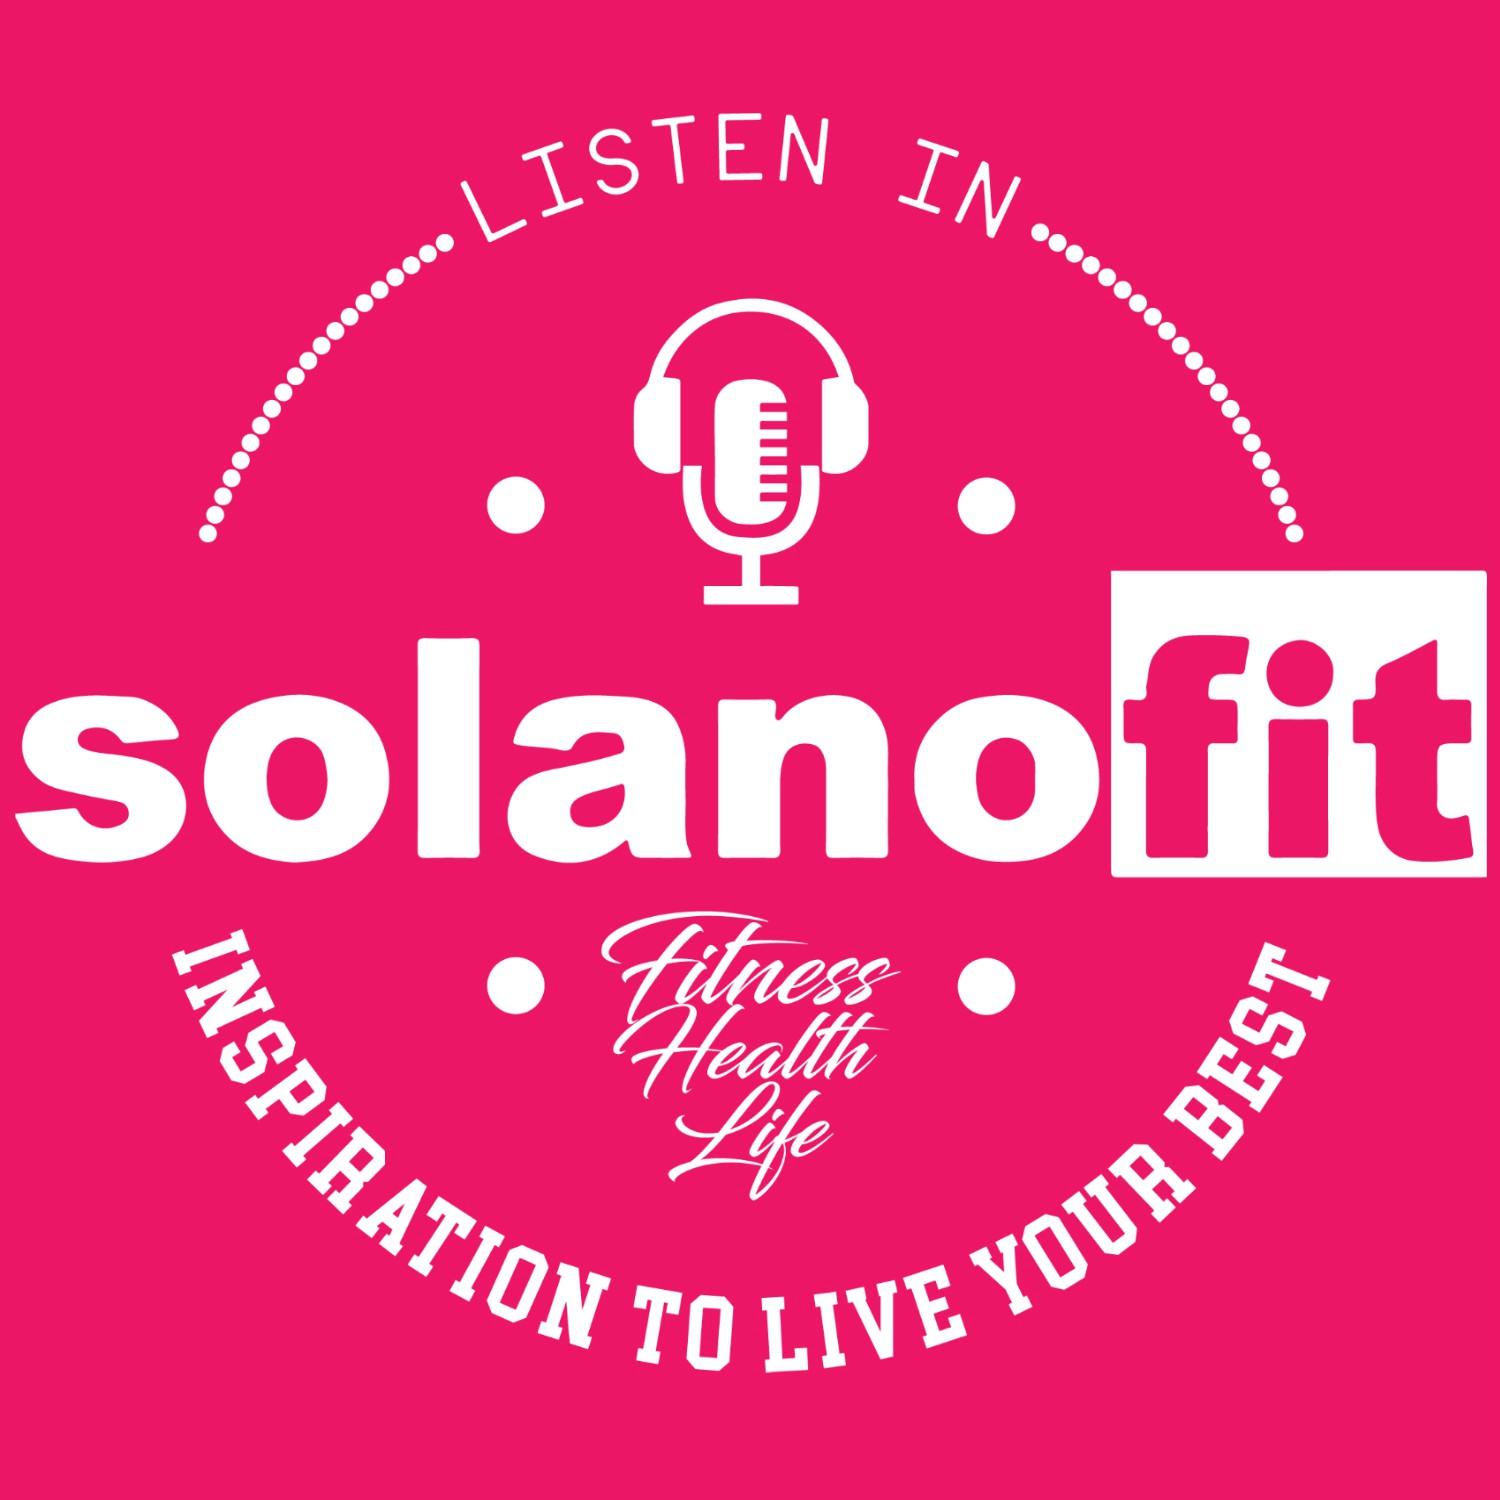 SolanoFit: The Podcast